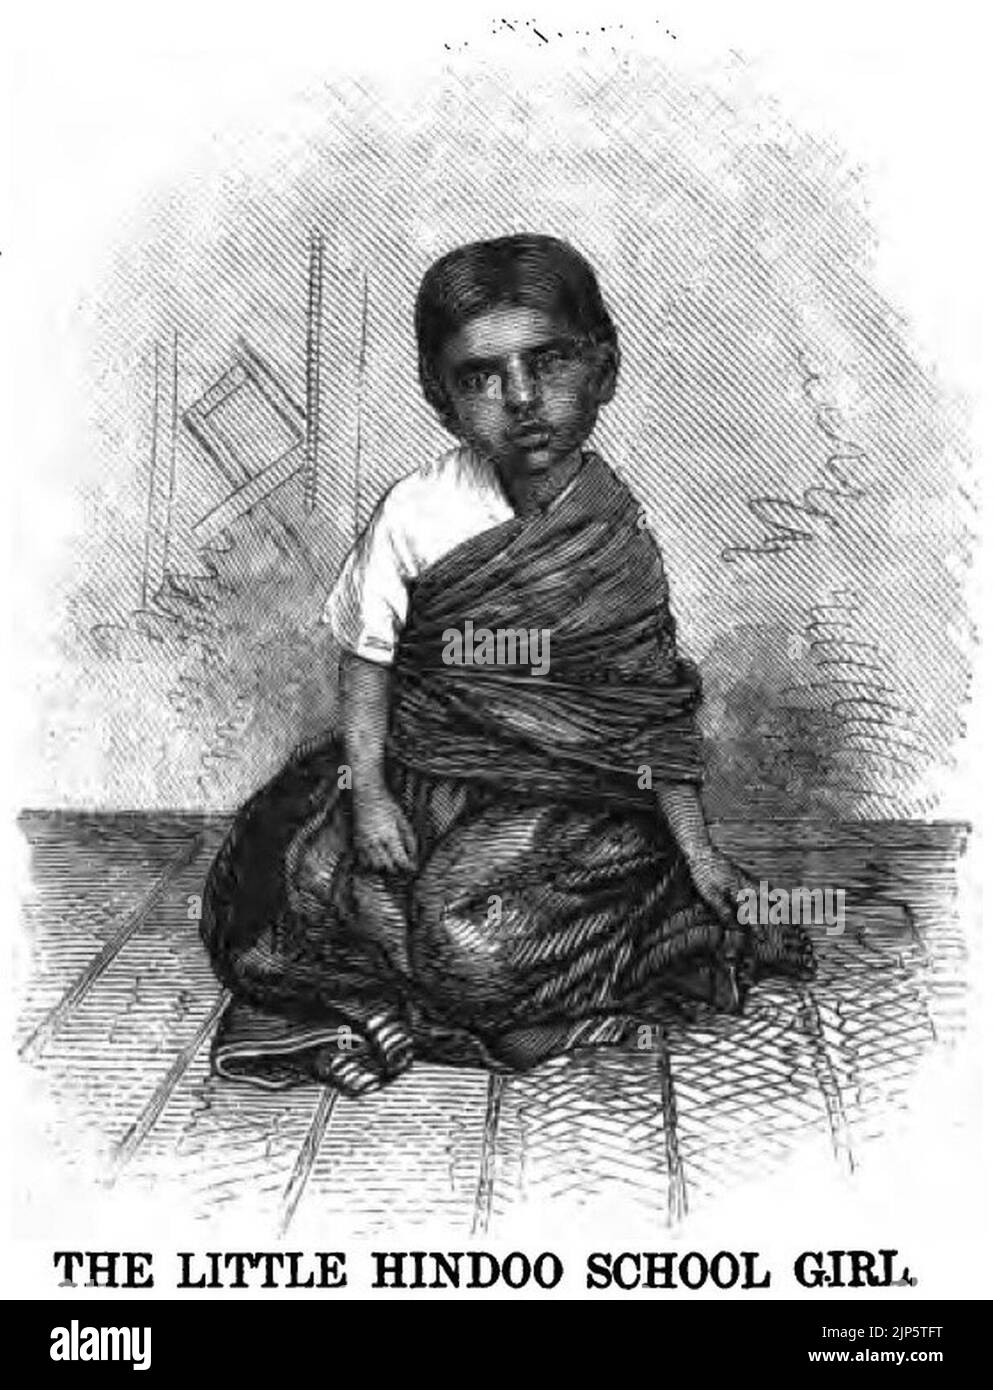 The Little Hindoo School Girl (p.81, June 1866, Sarah Sanderson - 22 March 1866, Leeds) - Copy Stock Photo